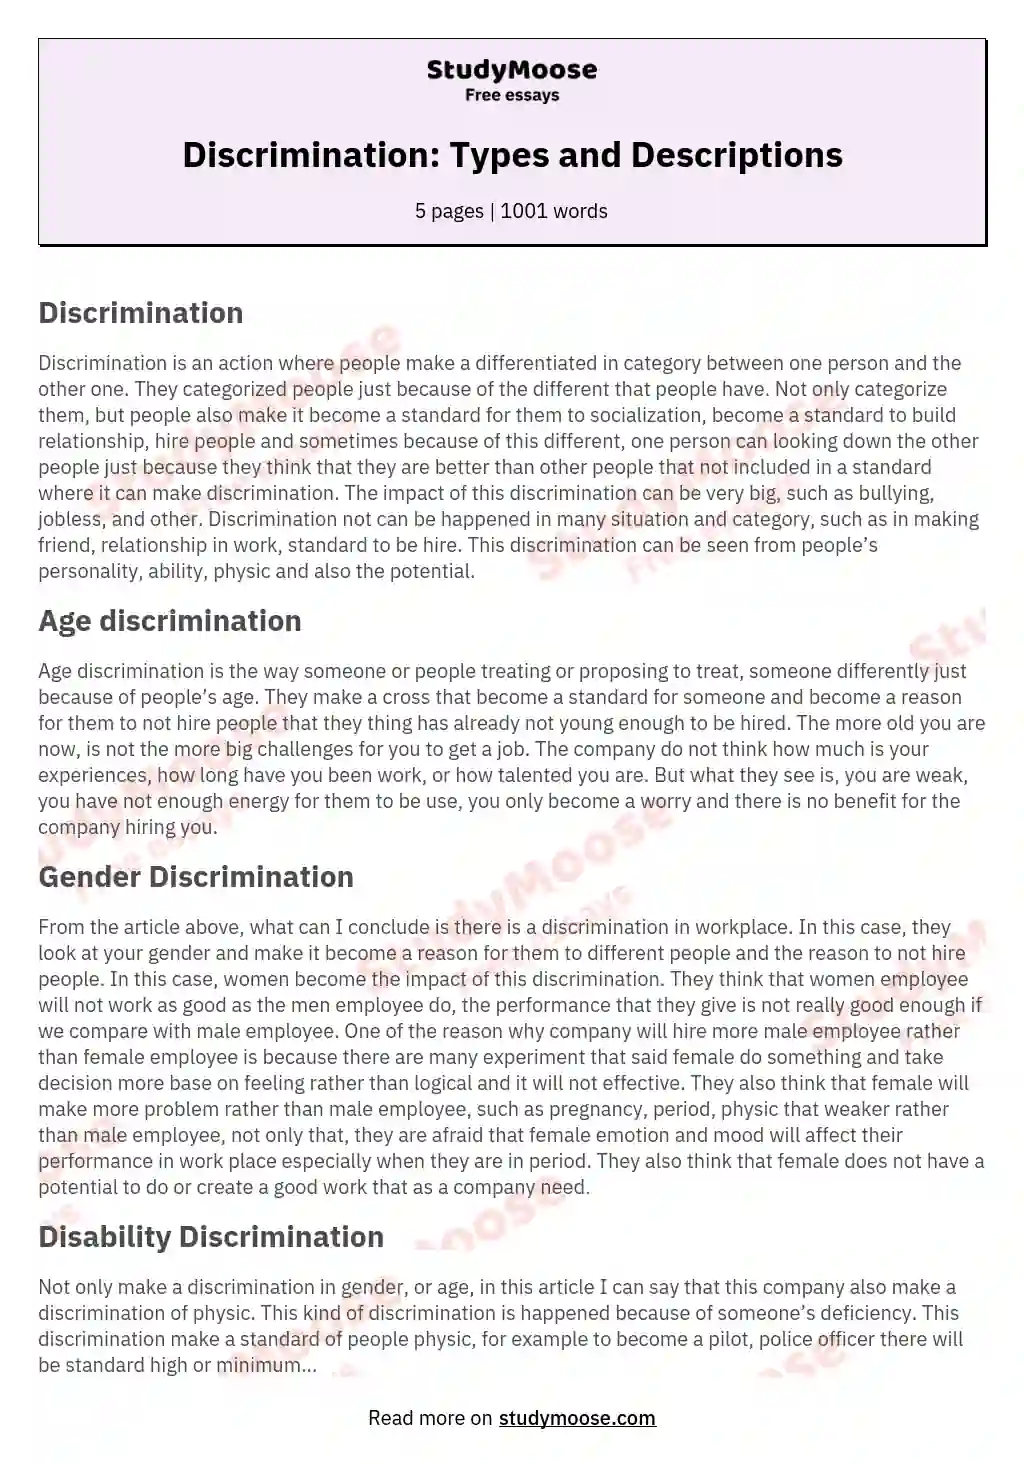 Discrimination: Types and Descriptions